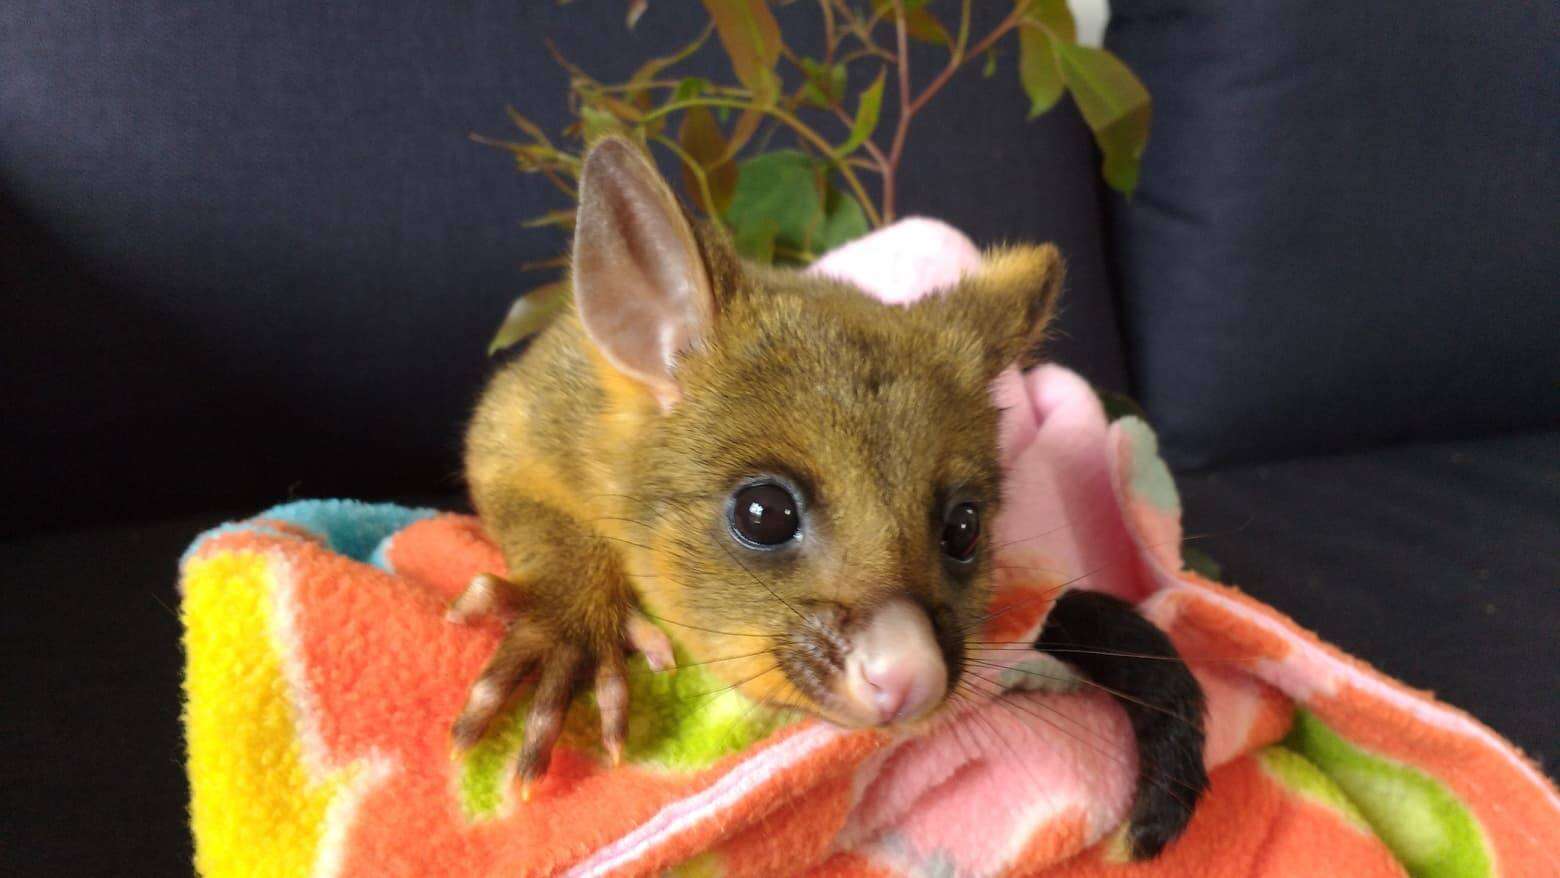 Rescued baby possum sitting on blanket